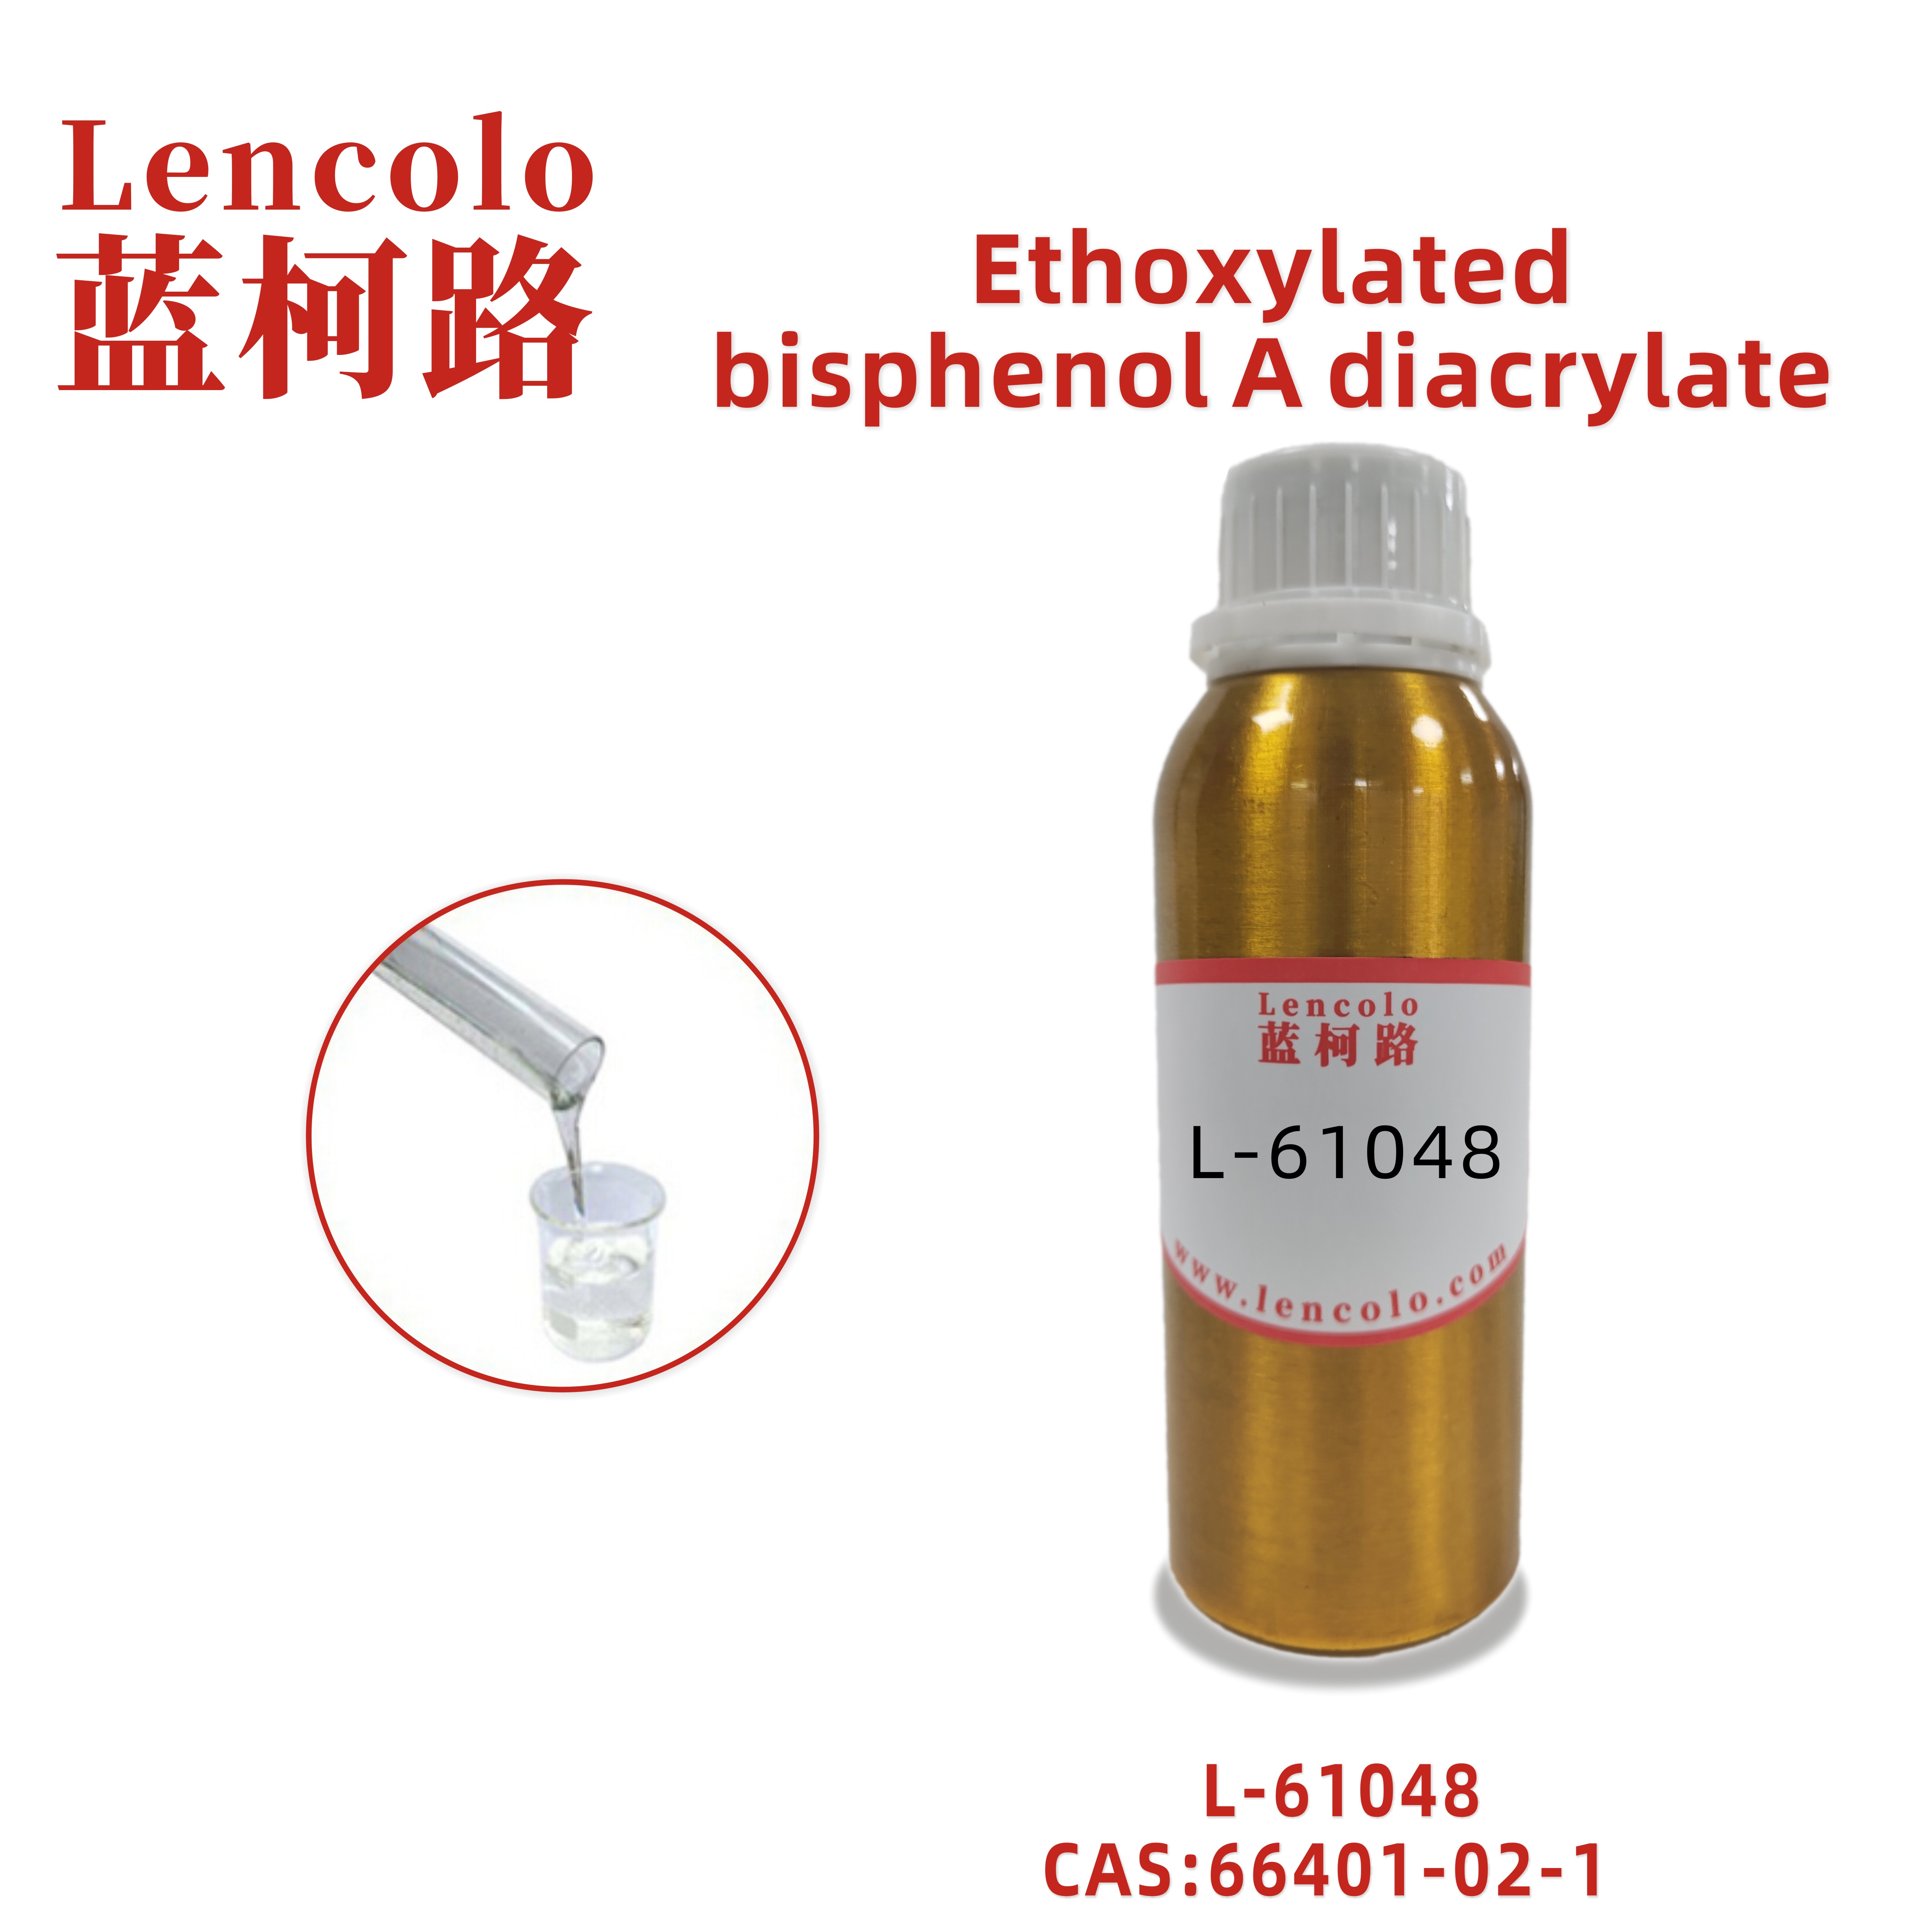 L-61048 (BPA10EODA) Ethoxylated bisphenol A diacrylate good uv monomer for adjusting the balance of affinity/hydrophobicity CAS 66401-02-1